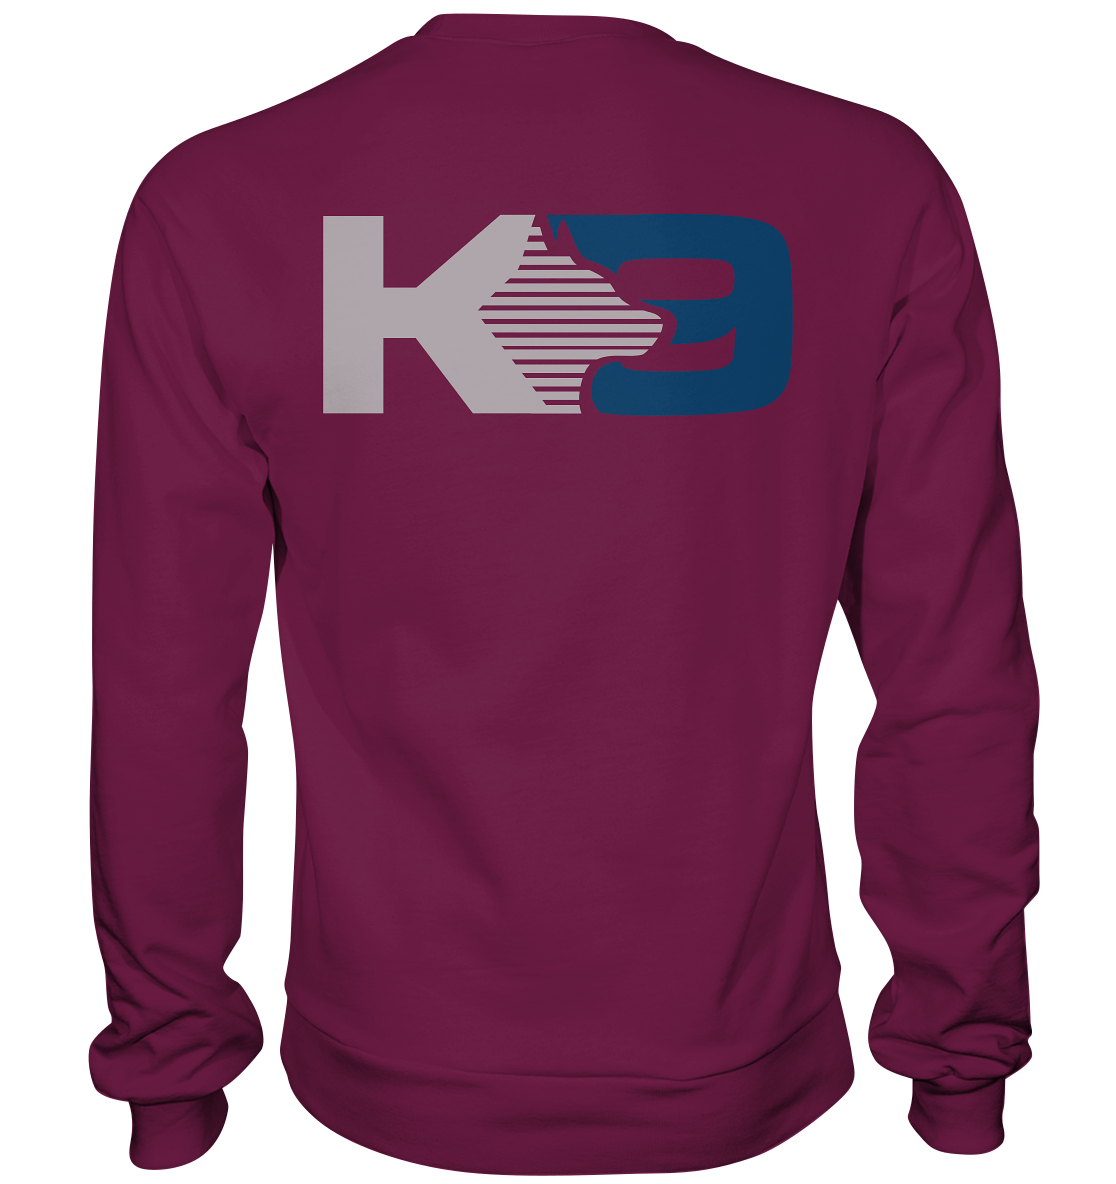 k-9 Logo - Premium Sweatshirt